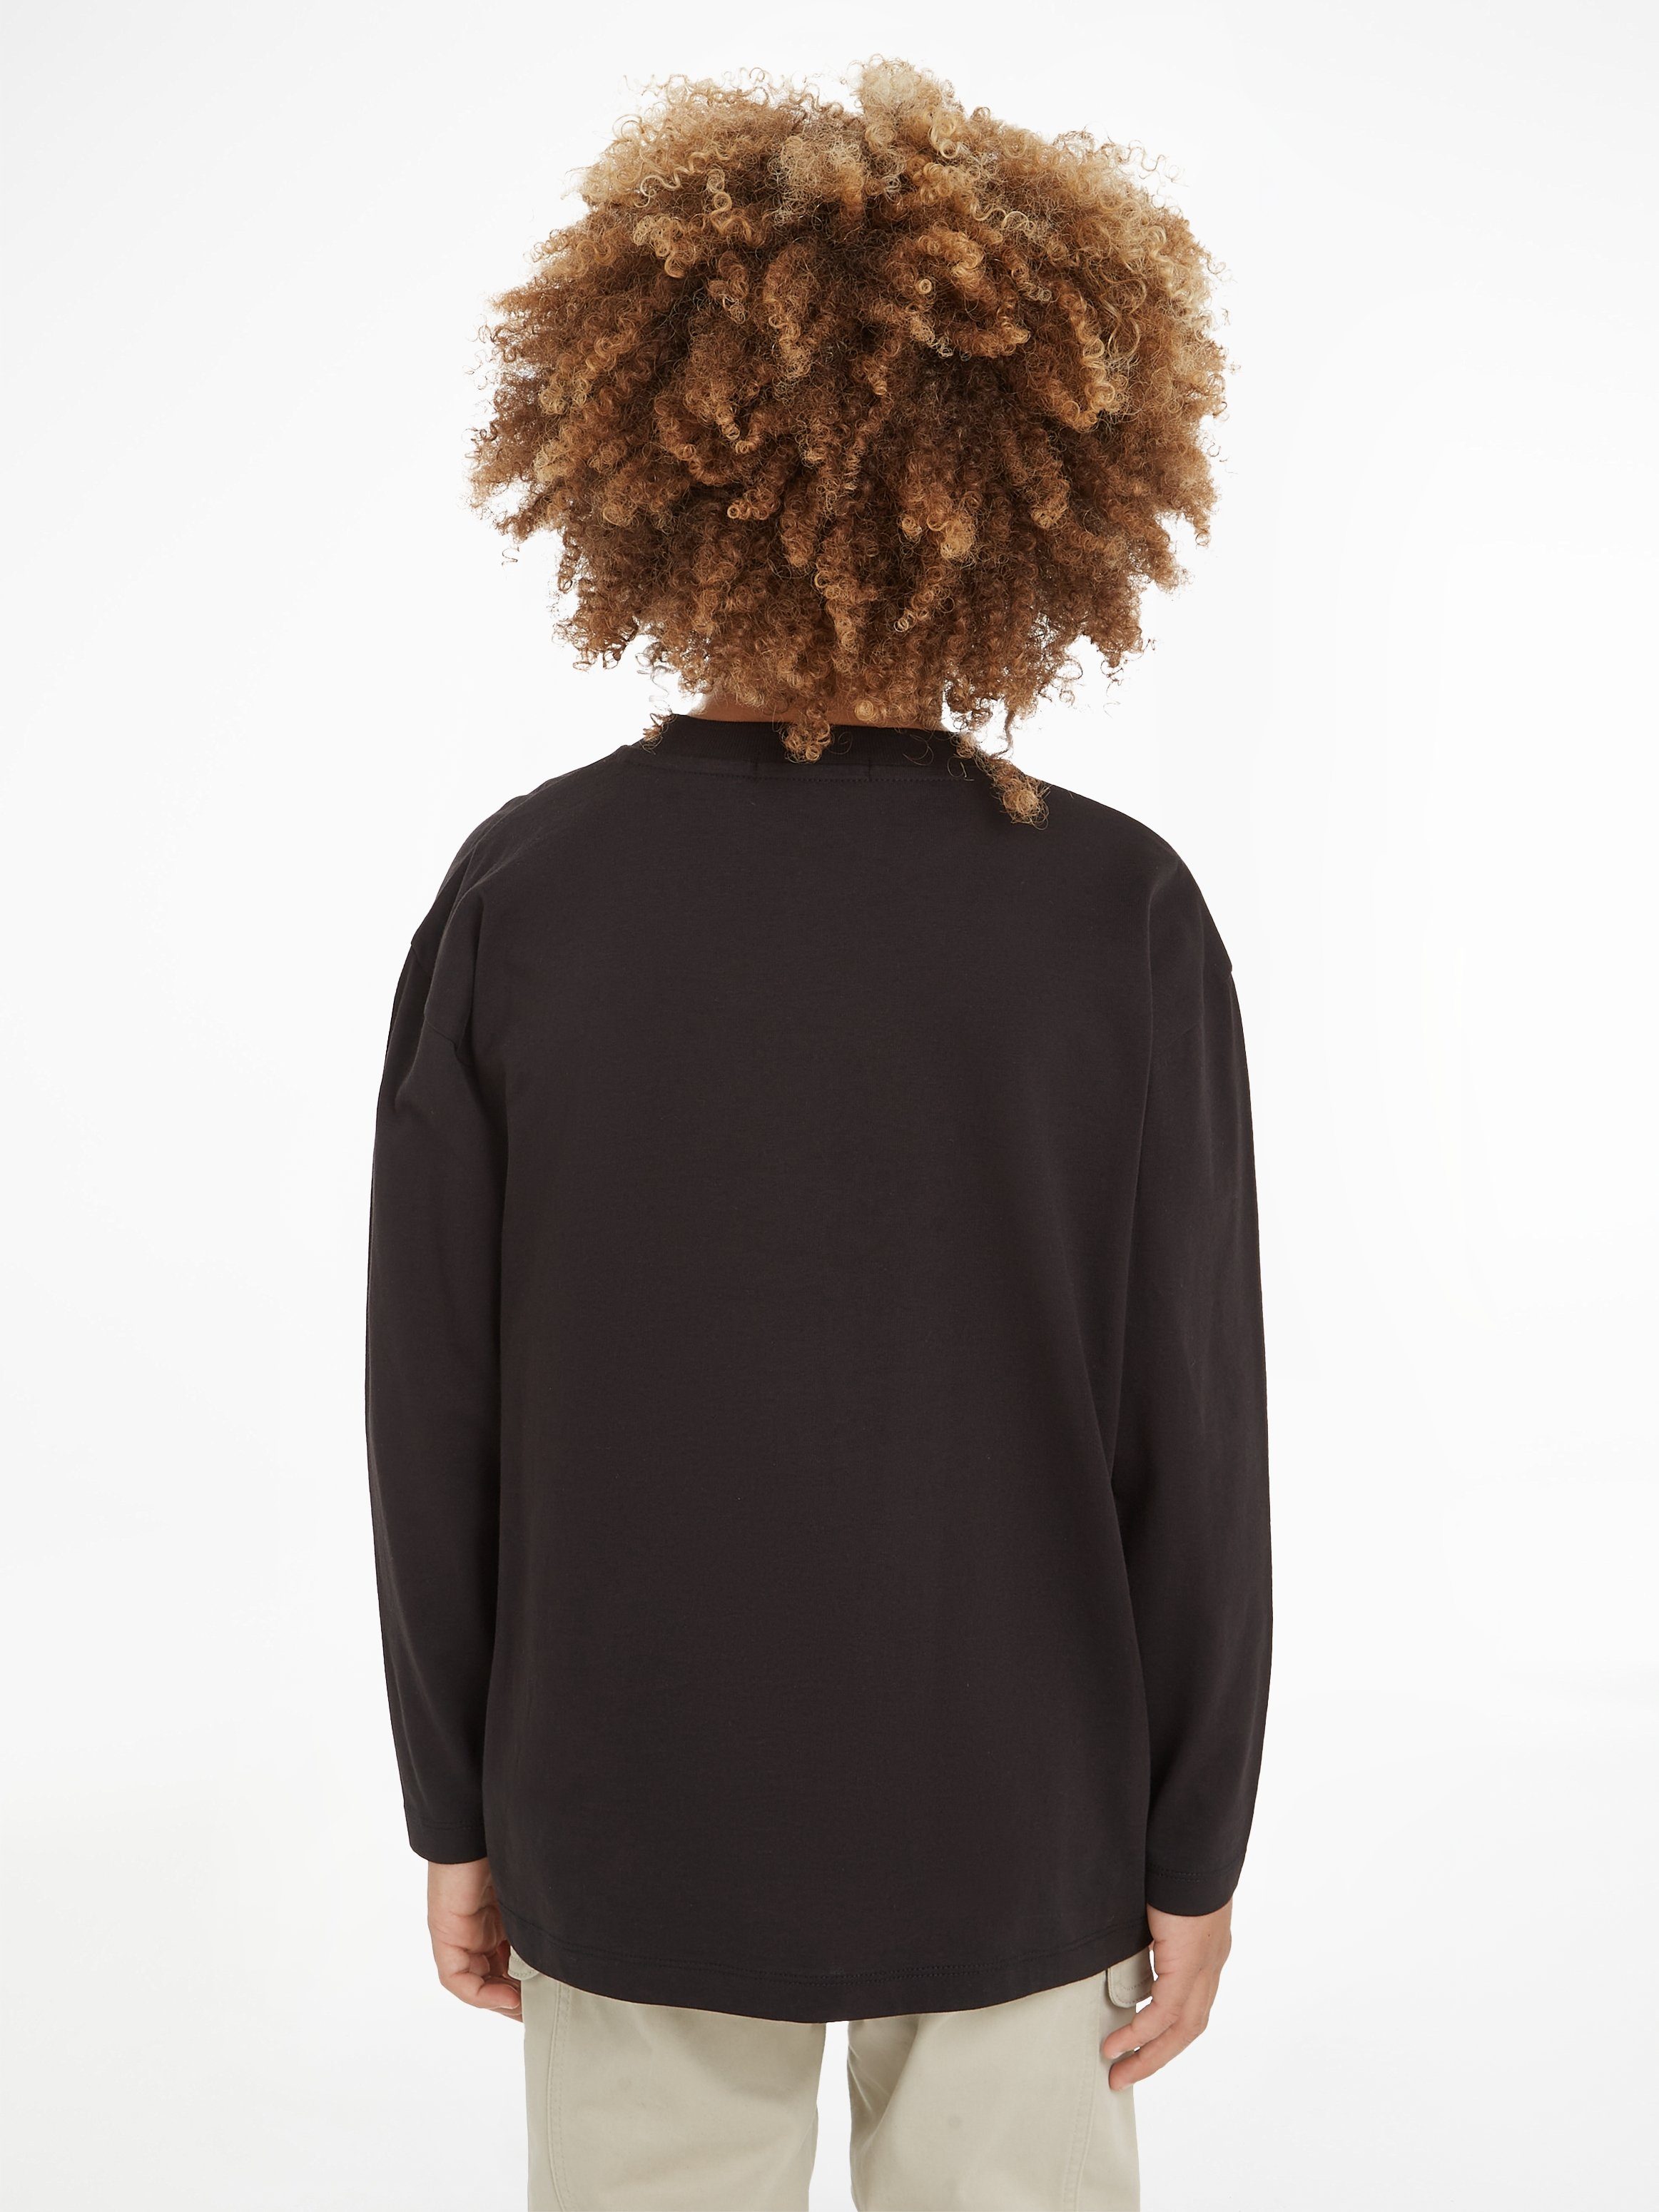 Jeans INST. RELAXED Calvin Klein T-SHIRT Ck LOGO mit Langarmshirt Logodruck glänzenden LS Black